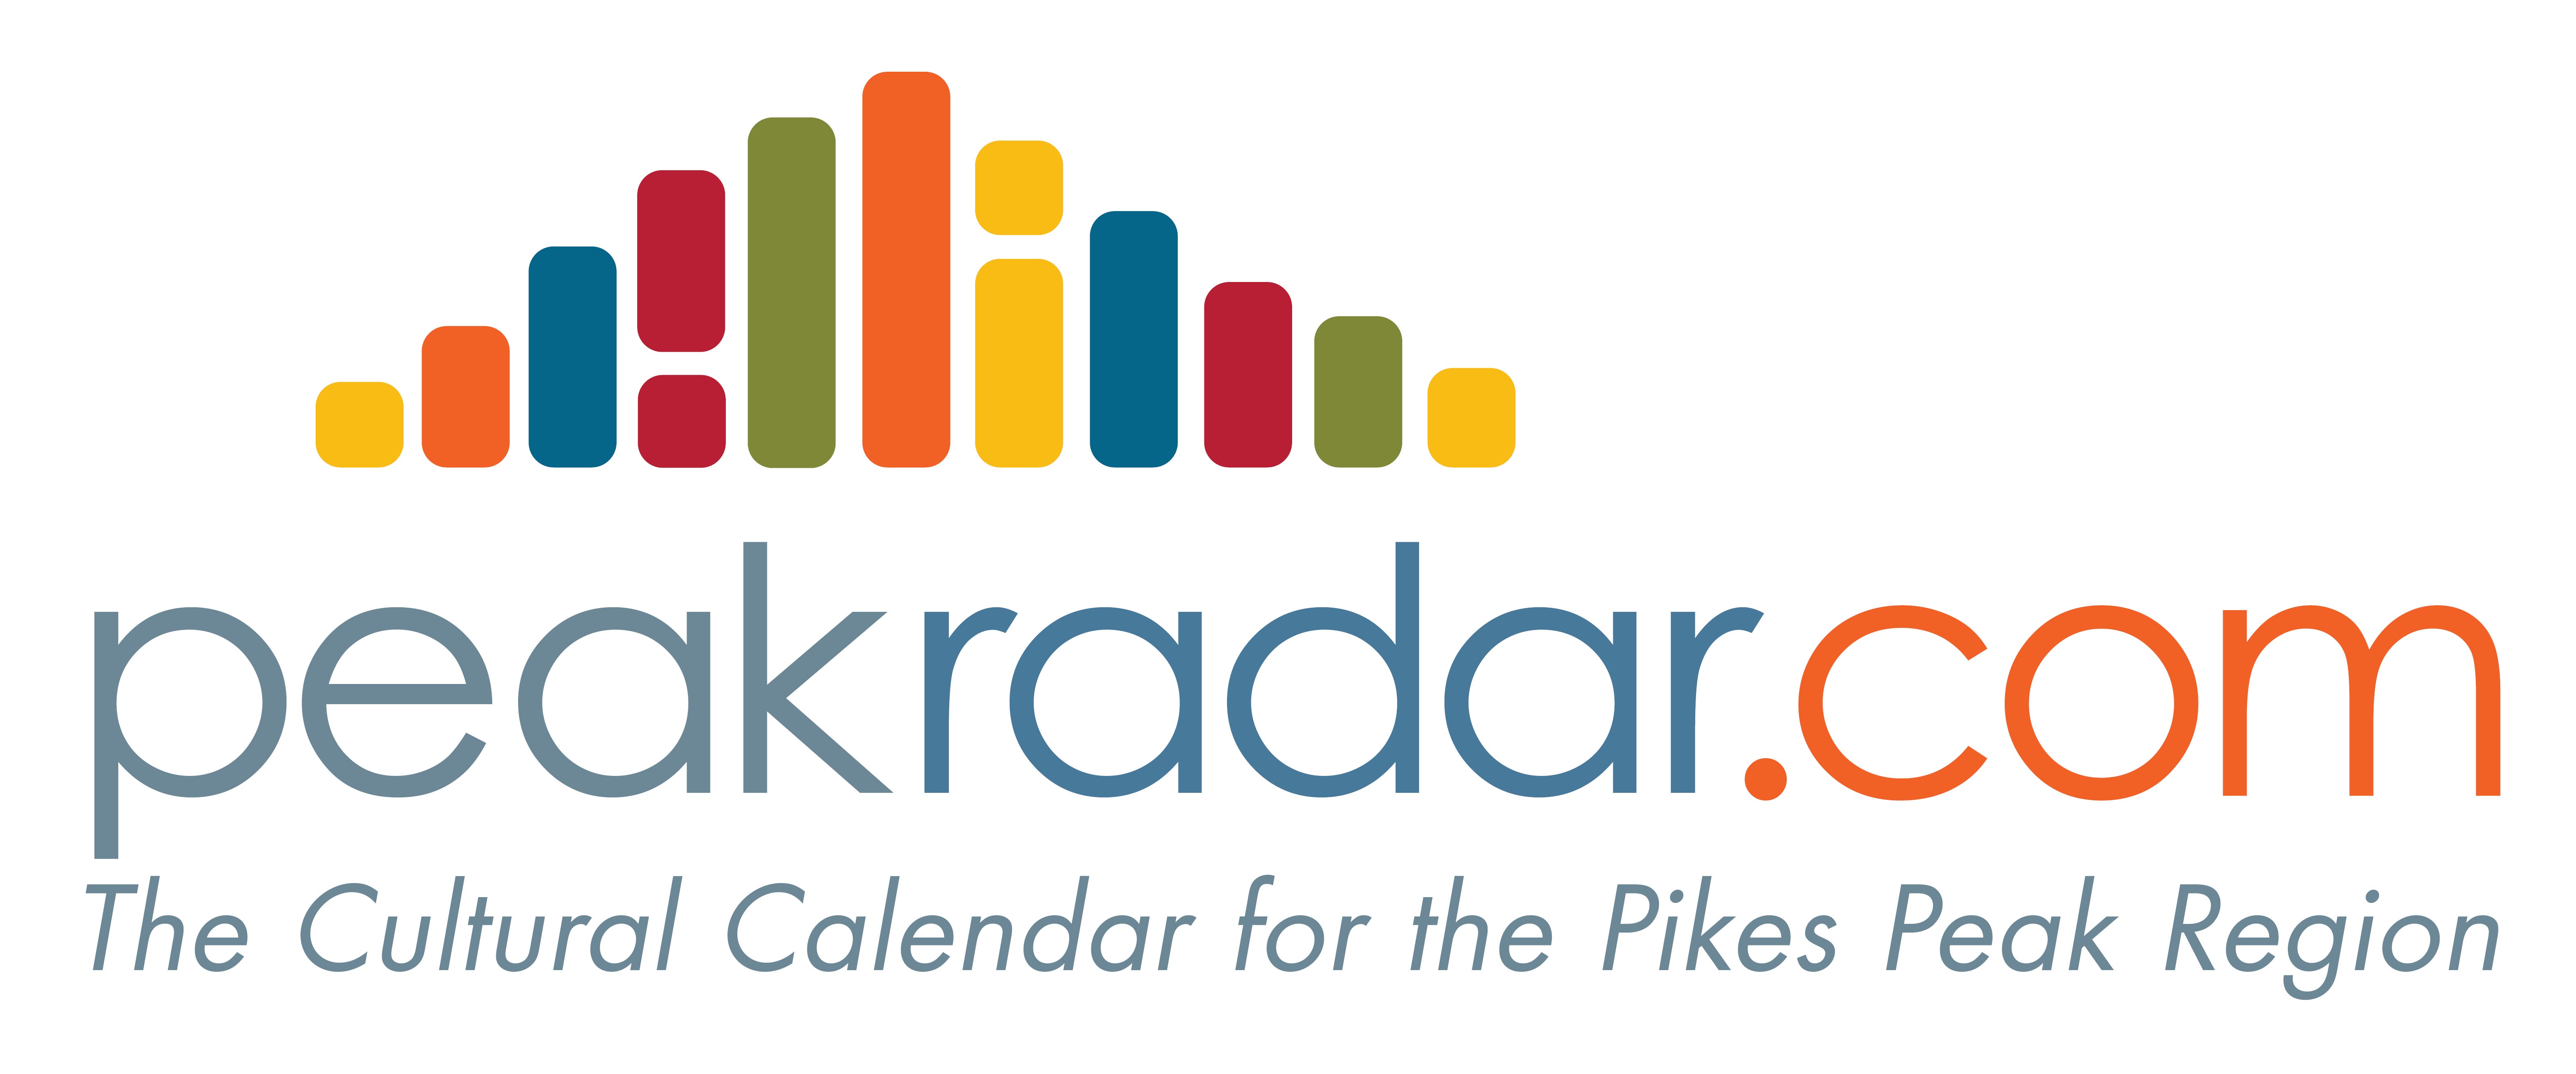 PeakRadar.com Logo with tagline: The Cultural Calendar for the Pikes Peak Region